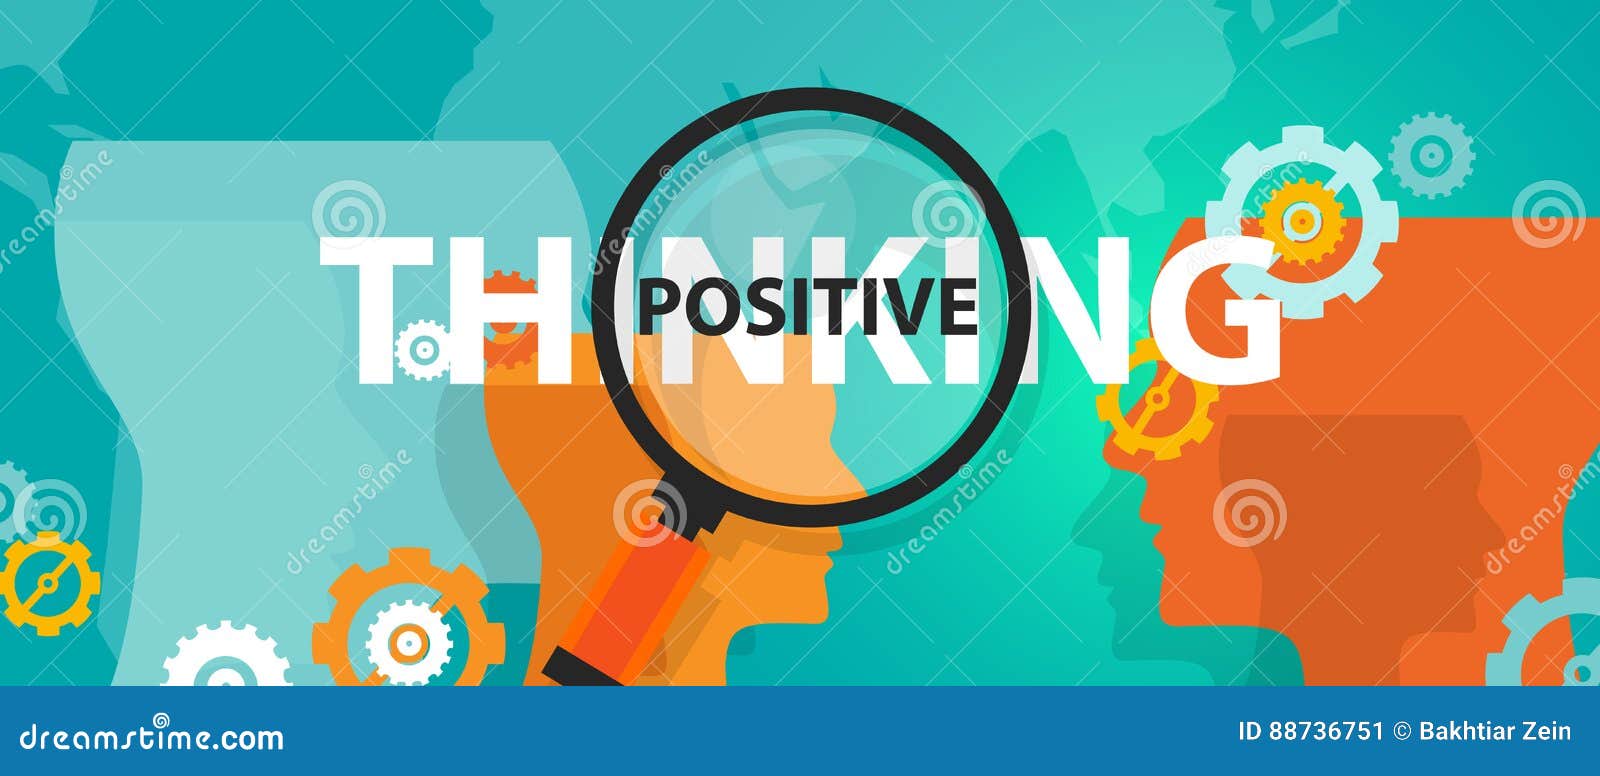 positive thinking positivity attitude future focus concept of thinking analysis mindset thoughts